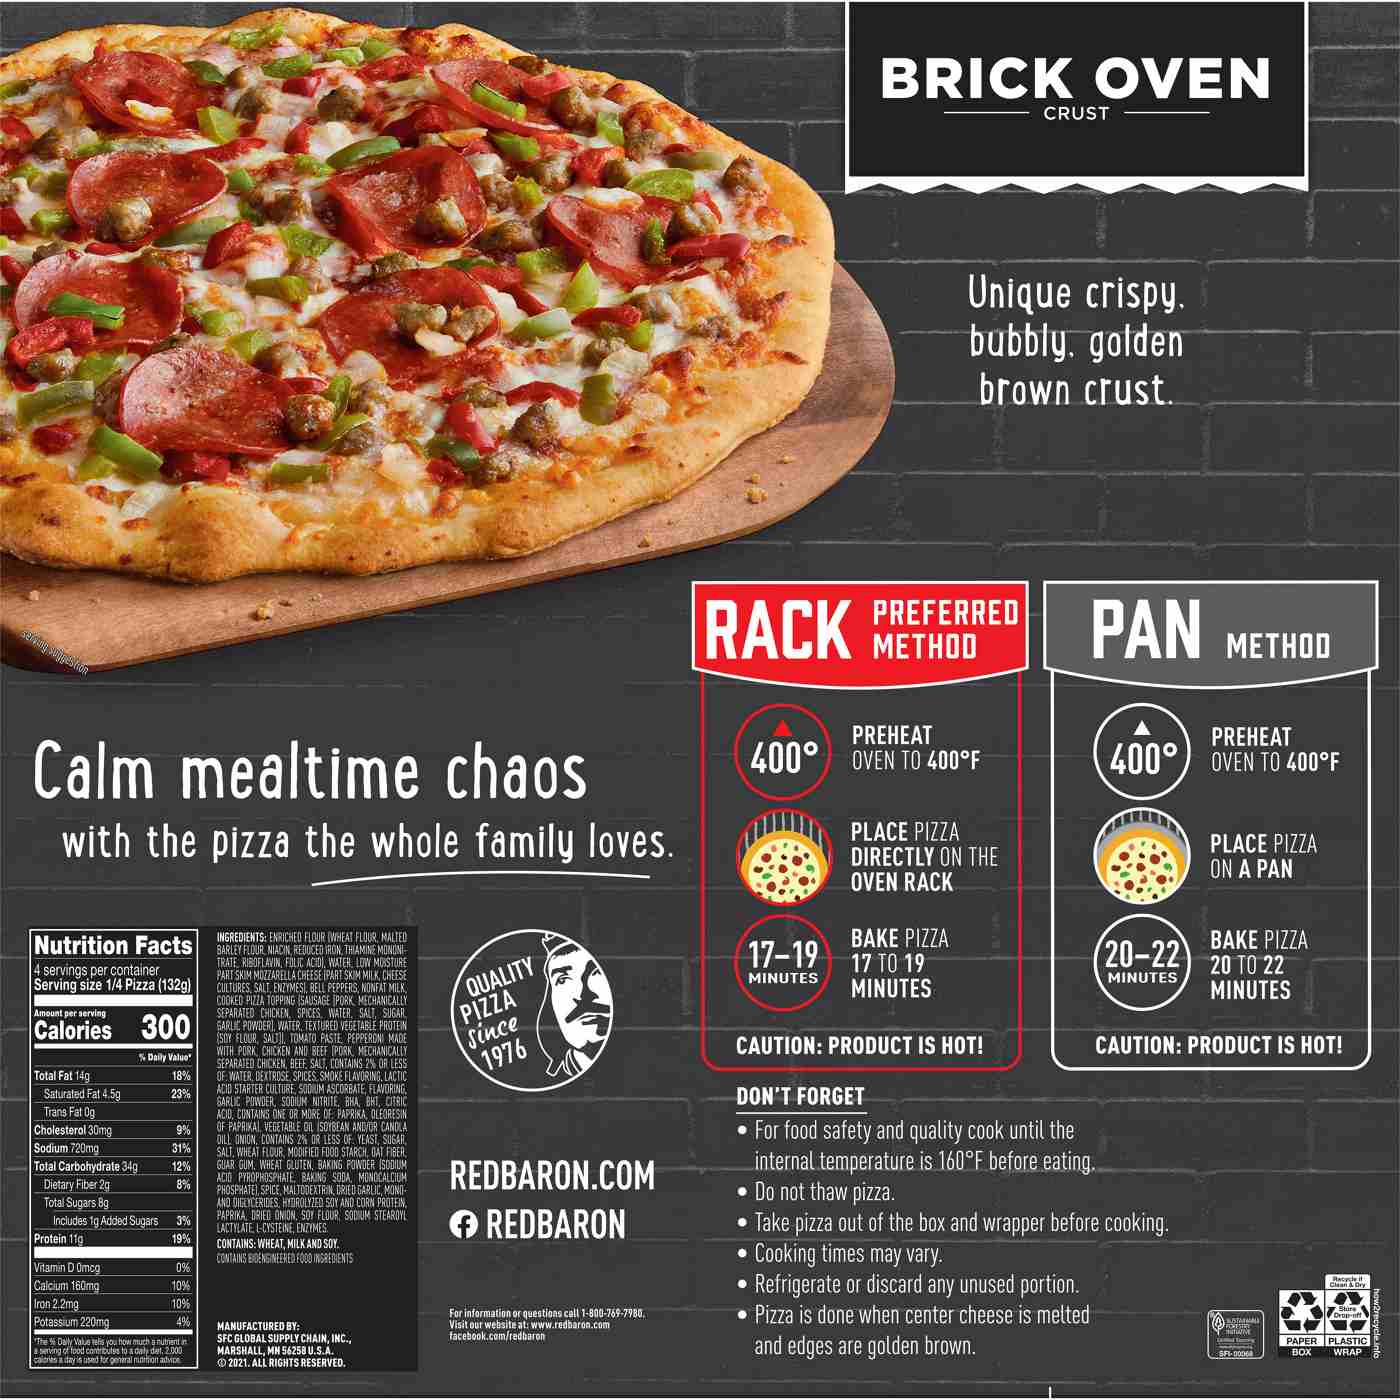 Red Baron Brick Oven Crust Frozen Pizza - Supreme; image 2 of 2